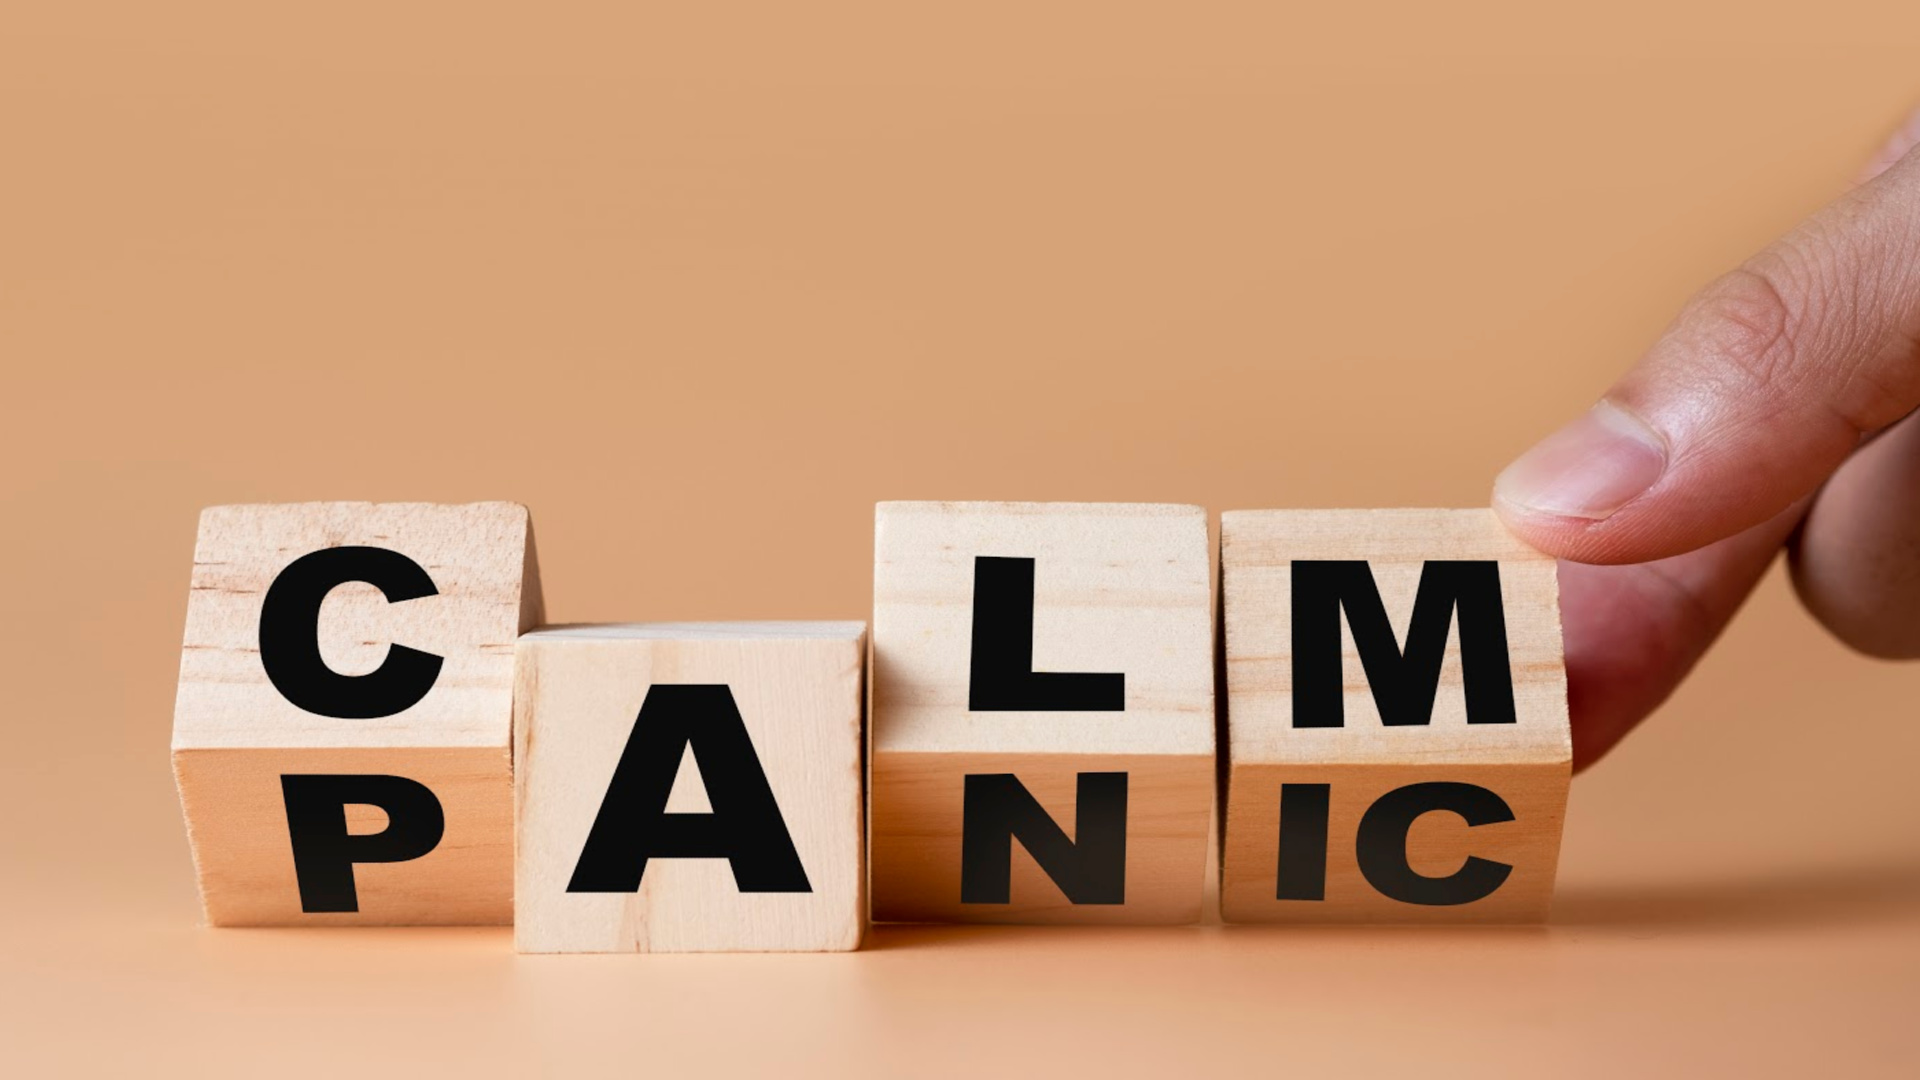 Image shows the words Calm/Panic on wood blocks